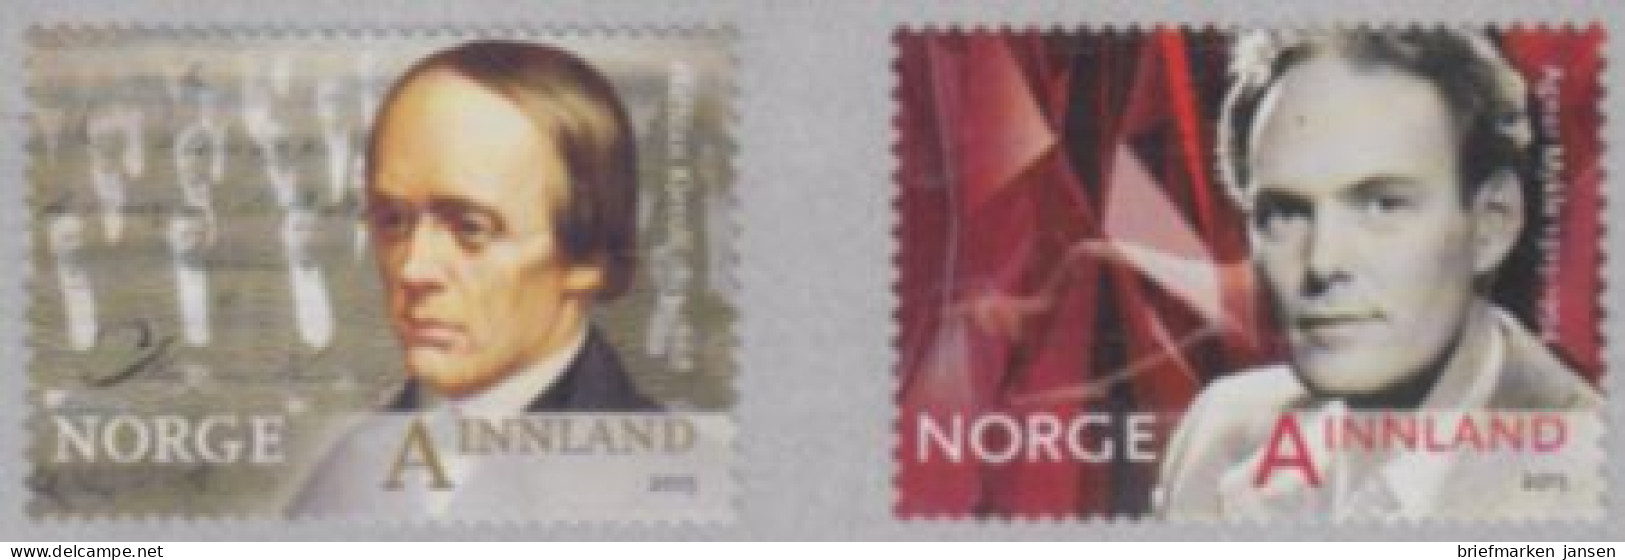 Norwegen Mi.Nr. 1890-91 Halfdan Kjerulf, Agnar Mykle, Skl. (2 Werte) - Neufs